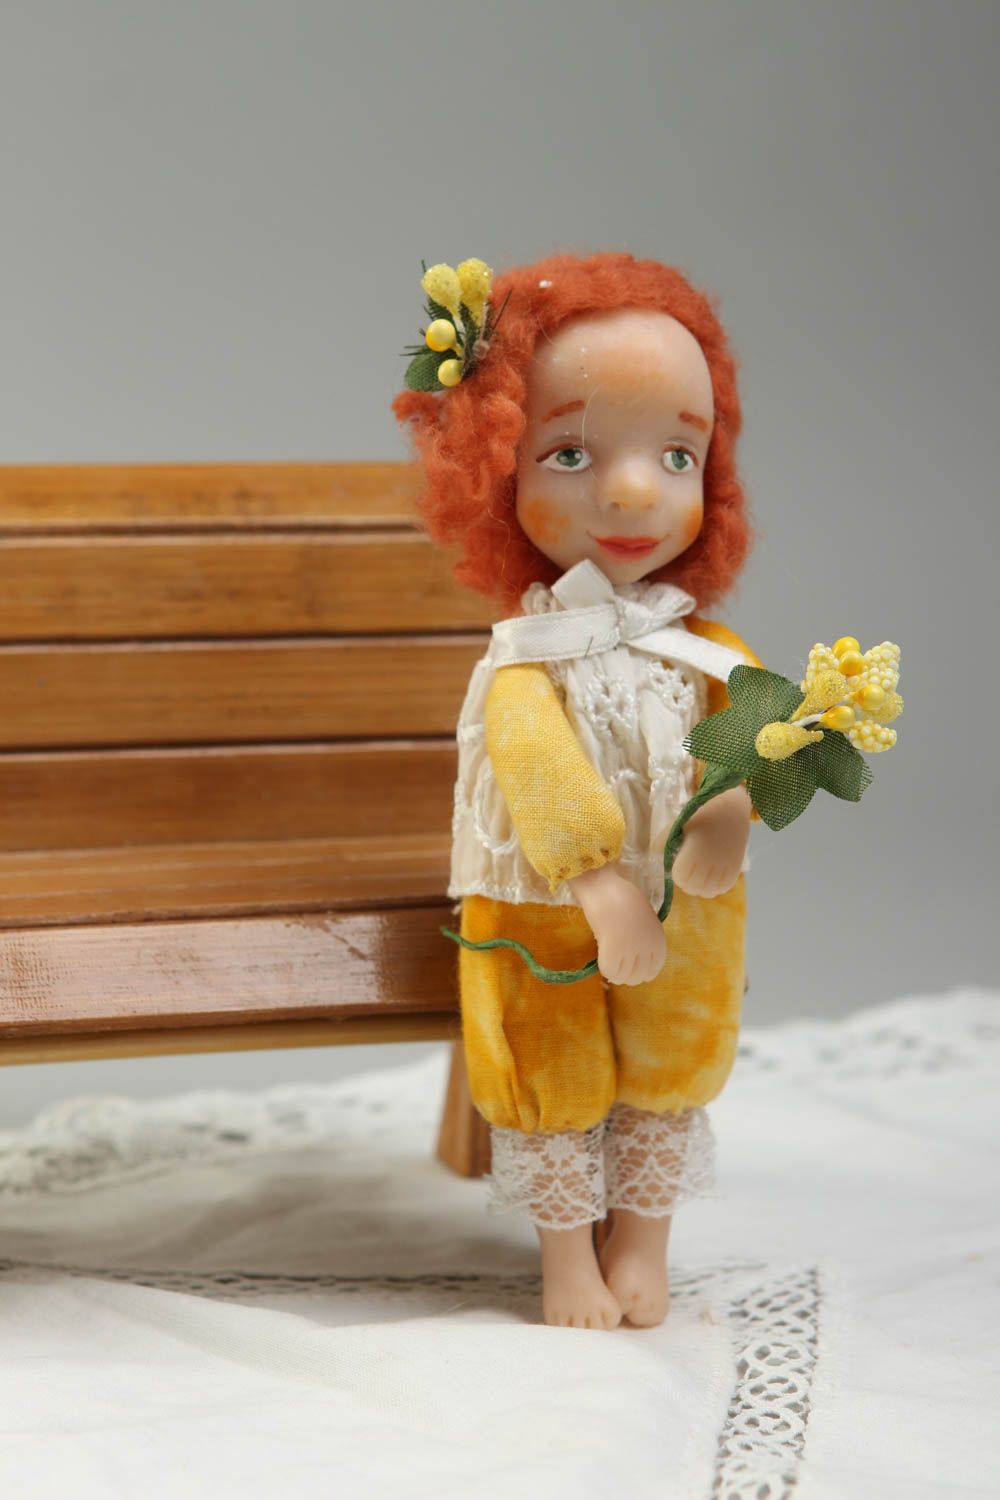 Muñeca artesanal de arcilla polimérica juguete original decoración de hogar foto 1